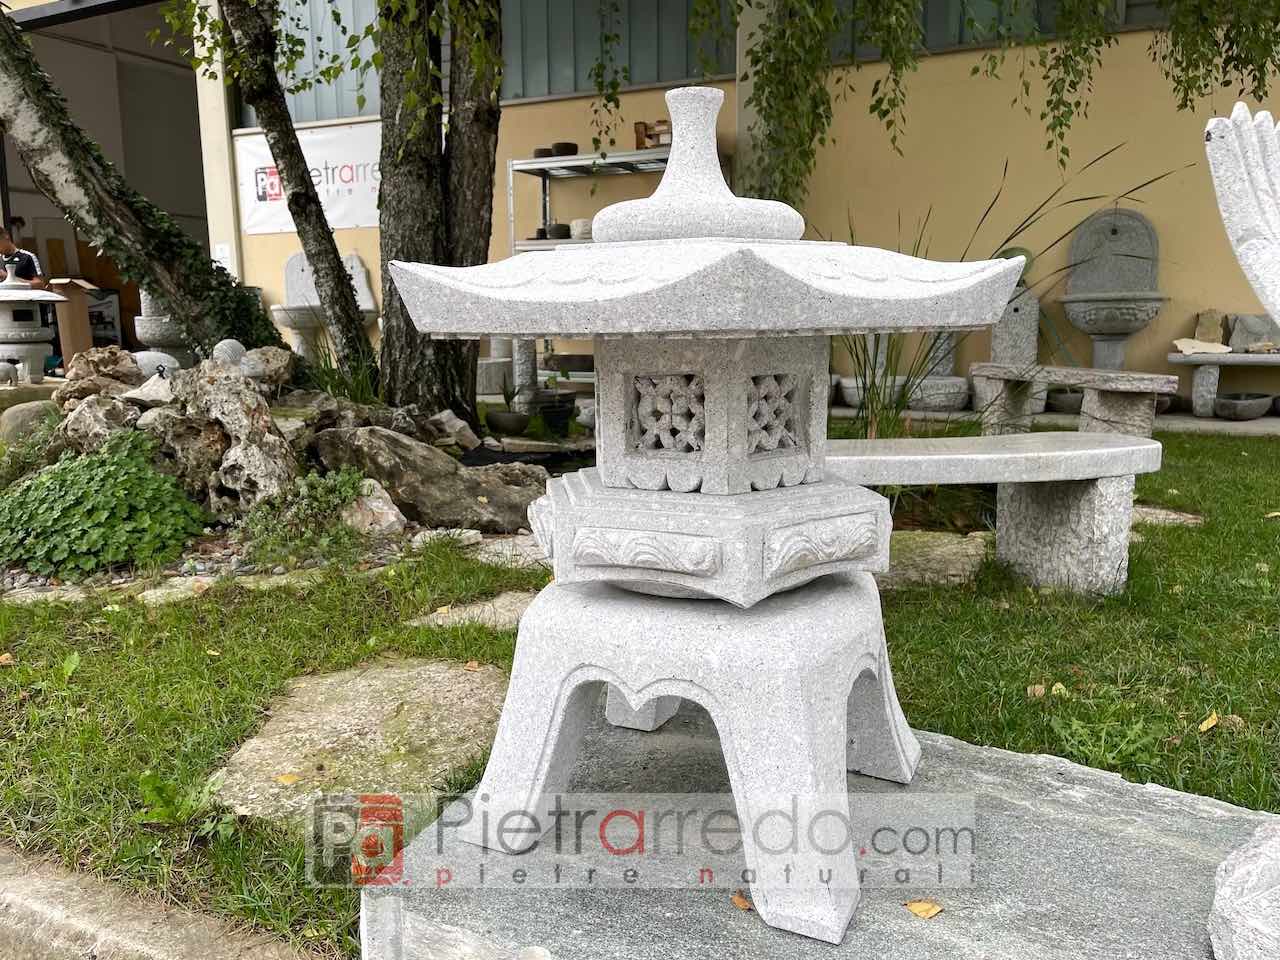 lanterna giapponese in pietra granito Rokkaku Yukimi altezza 90 cm in offerta per giardini zen giapponesi pietrarredo Parabiago Milano Italia Stone prezzo